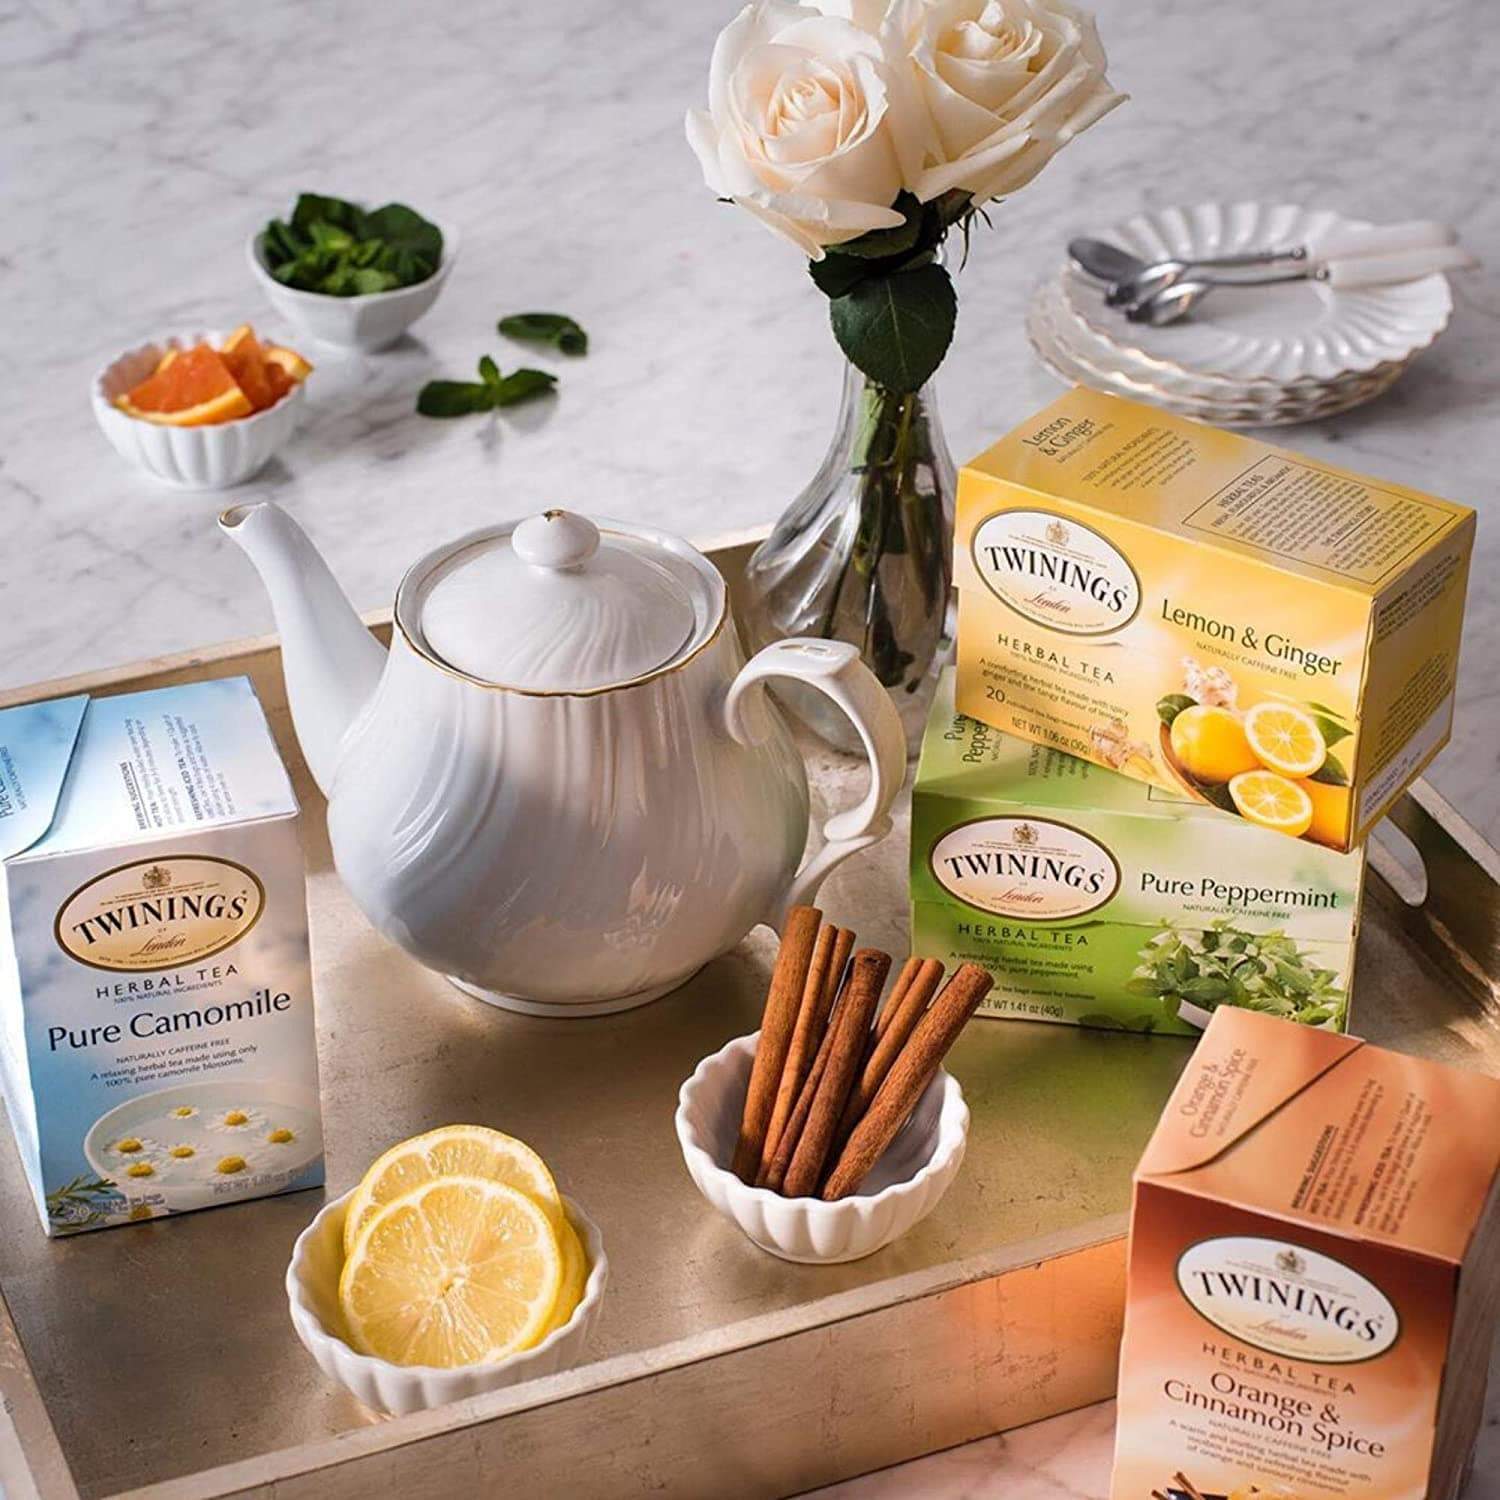 Art of Tea | Assorted Tea Bags Sampler Caffeinated and Non-Caffeinated| 12  Count Sampler Box